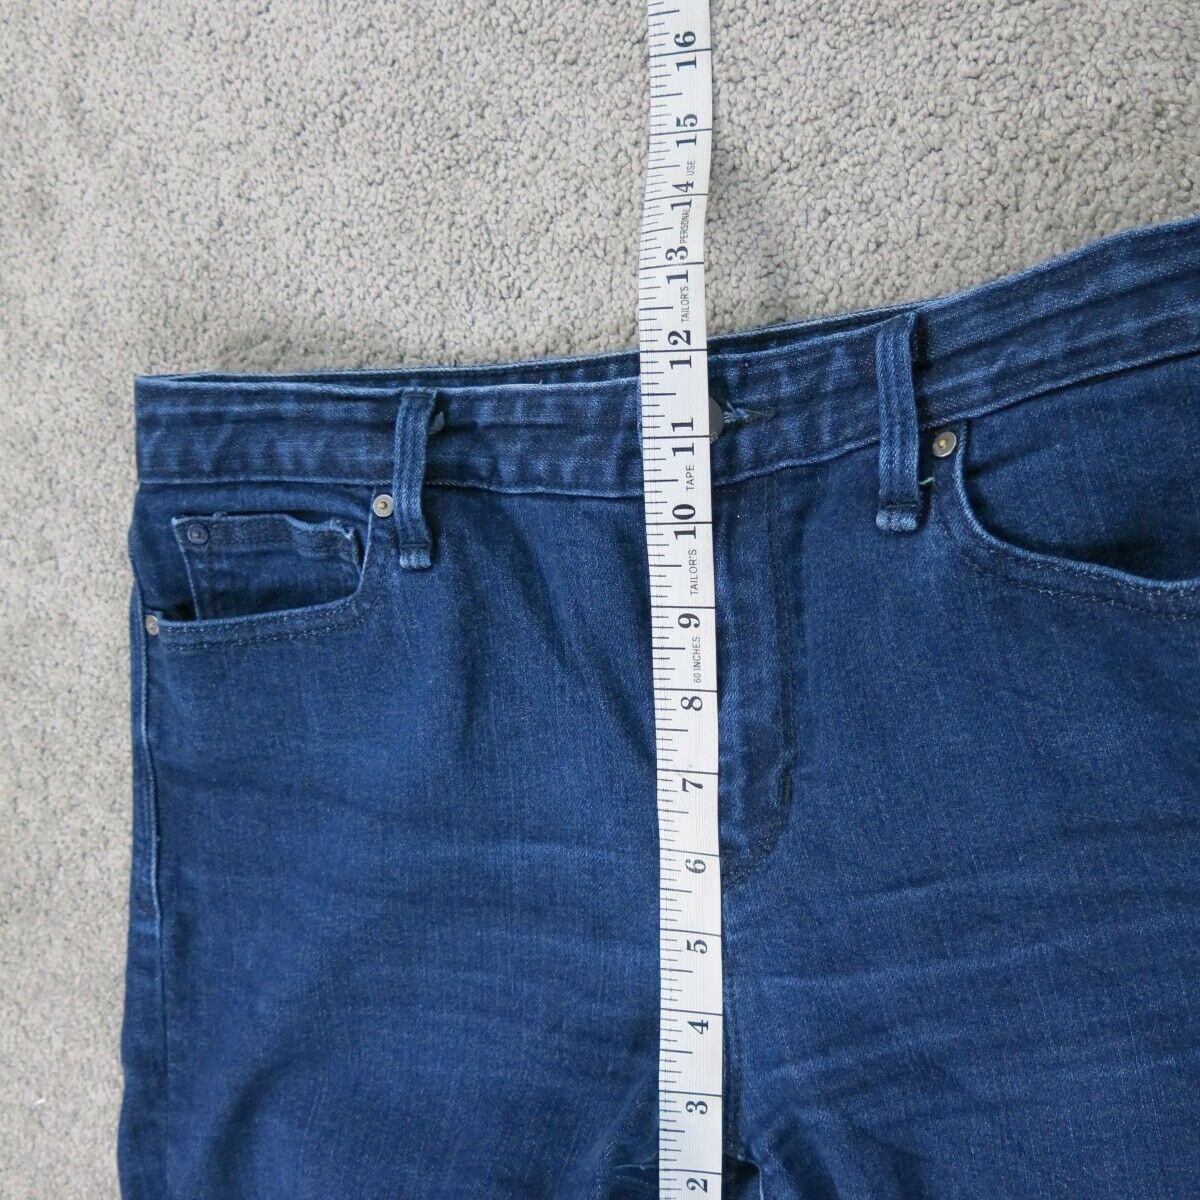 Womens Real Straight Leg Jeans Denim Stretch Mid Rise 5 Pocket Blue Size 29